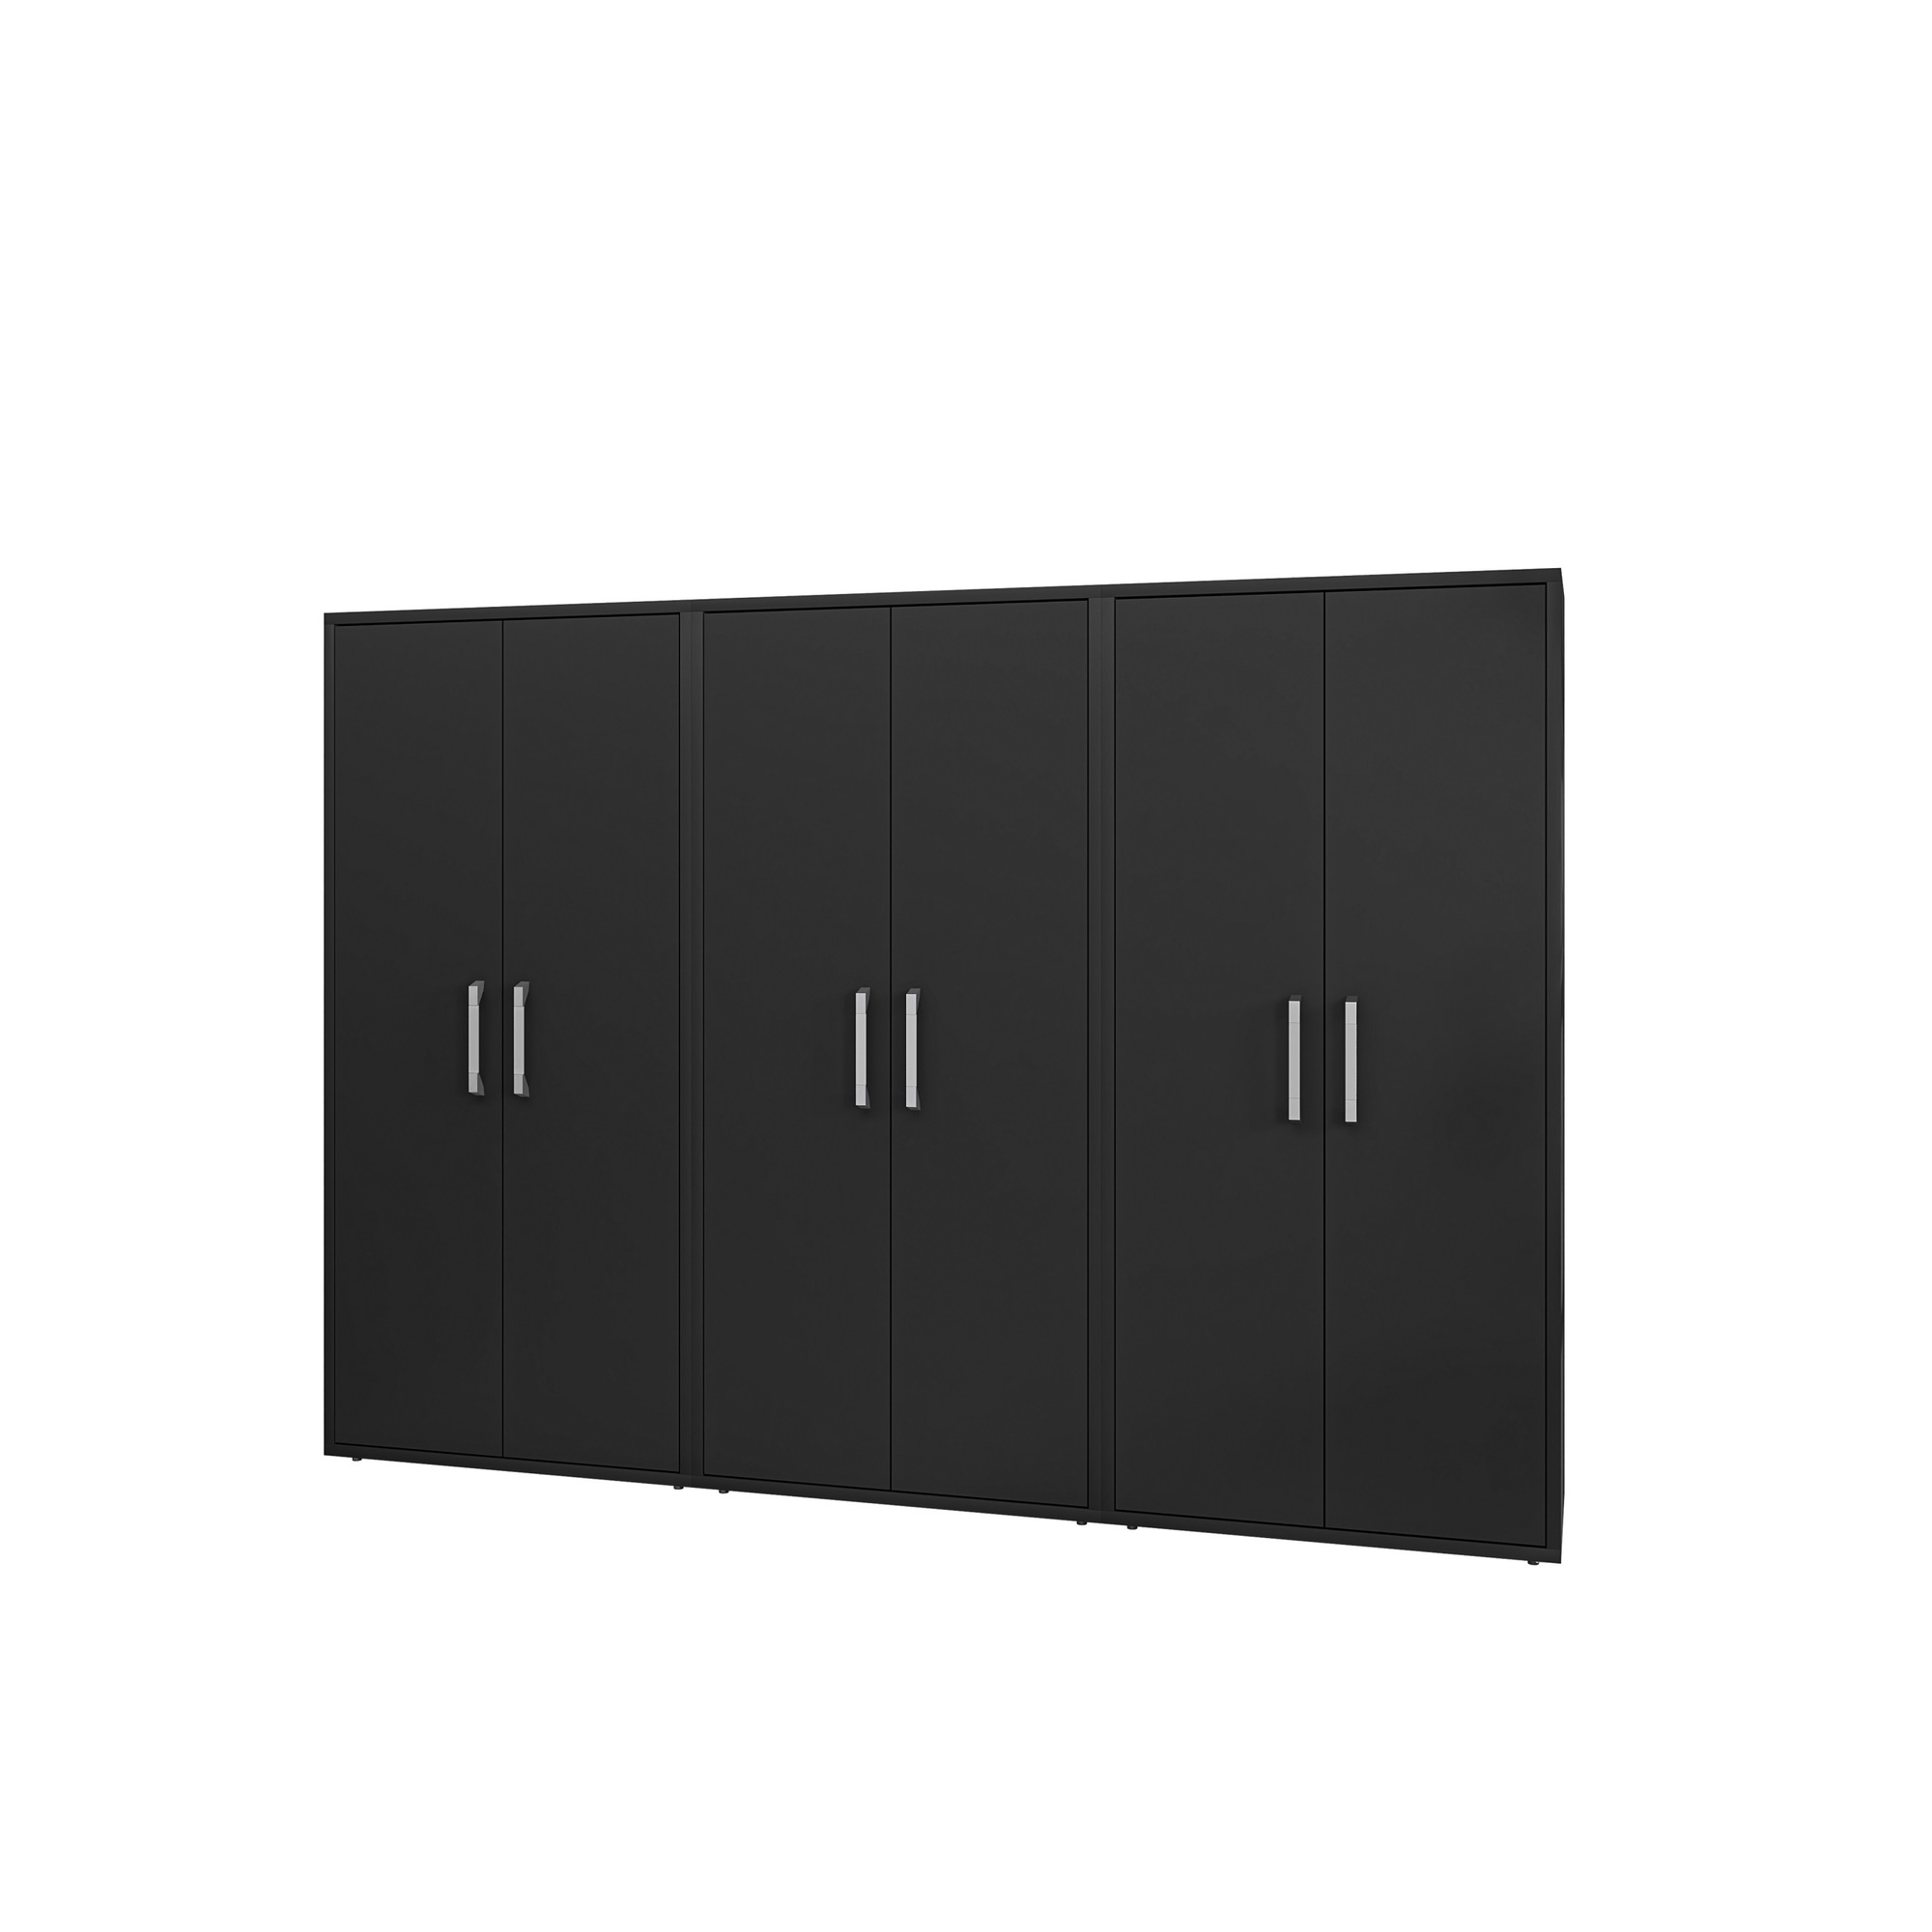 Manhattan Comfort, Eiffel Storage Cabinet in Matte Black, Set of 3 Height 73.43 in, Width 106.29 in, Color Black, Model 3-250BMC